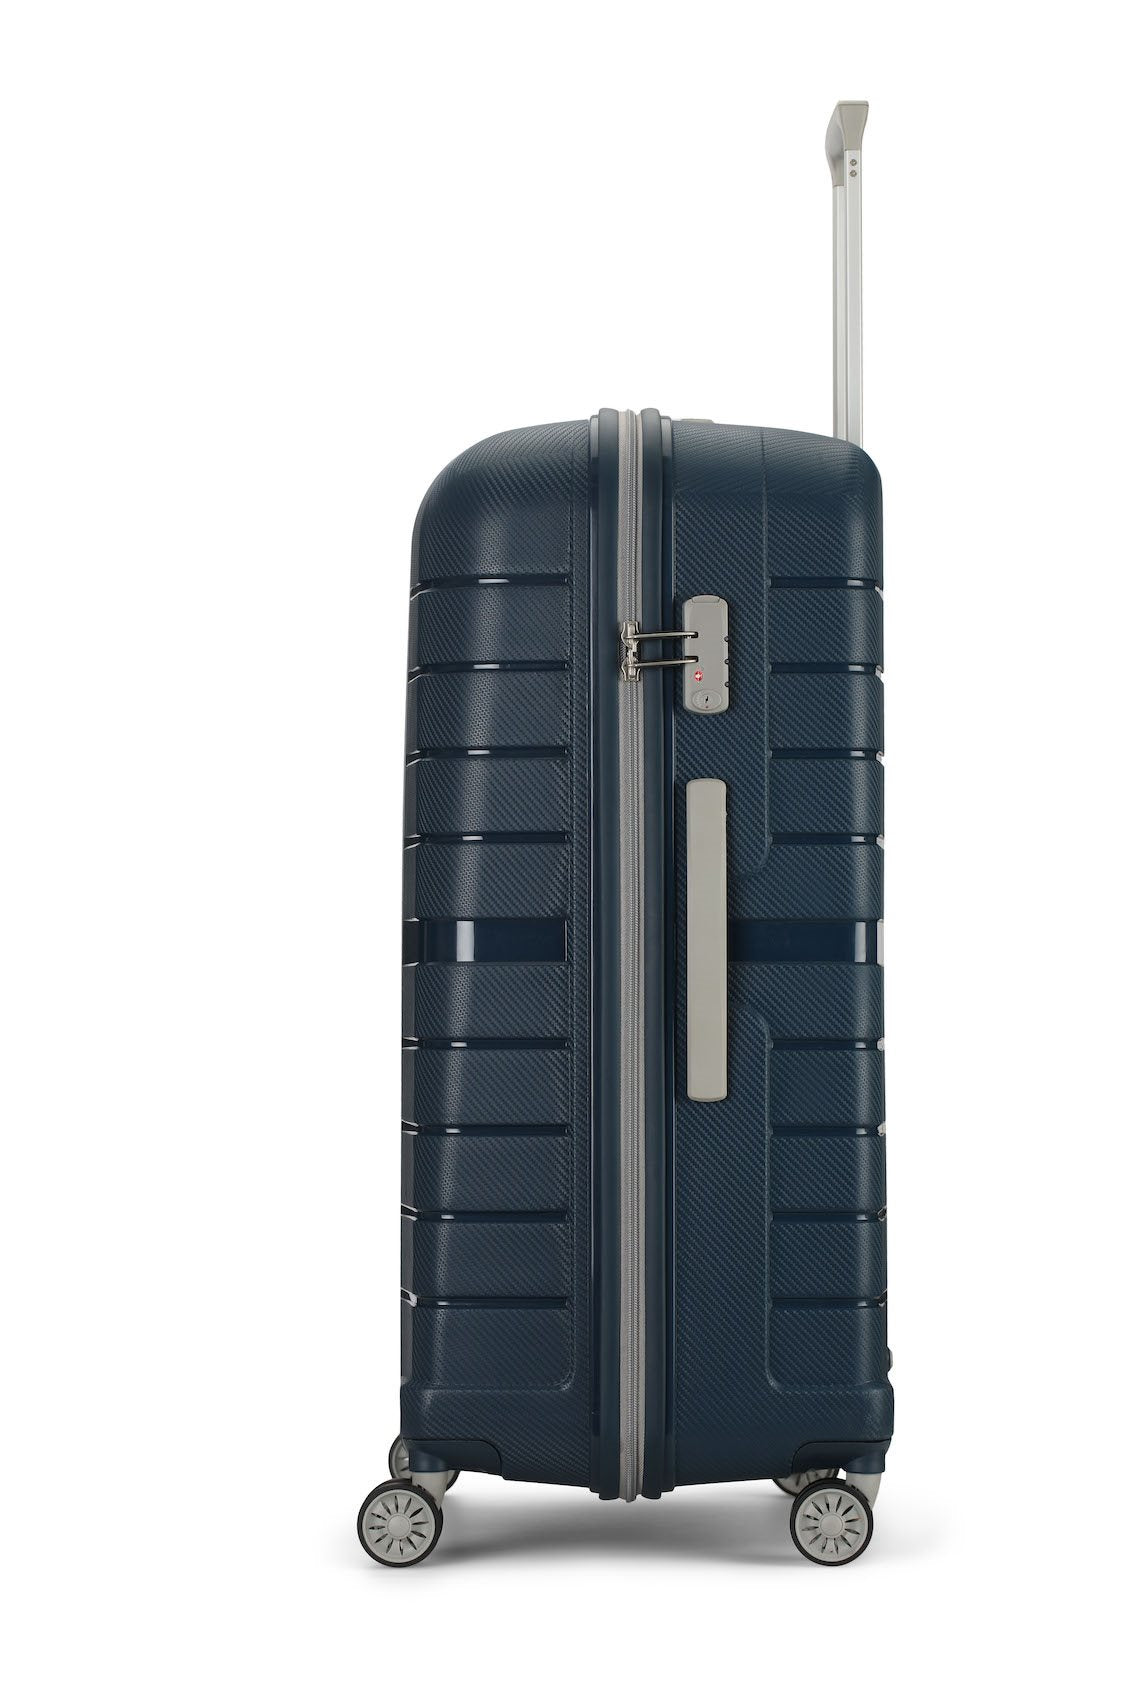 Carlton Voyager Plus - 55cm - Poseidon Blauw Handbagage Koffer - Reisartikelen-nl